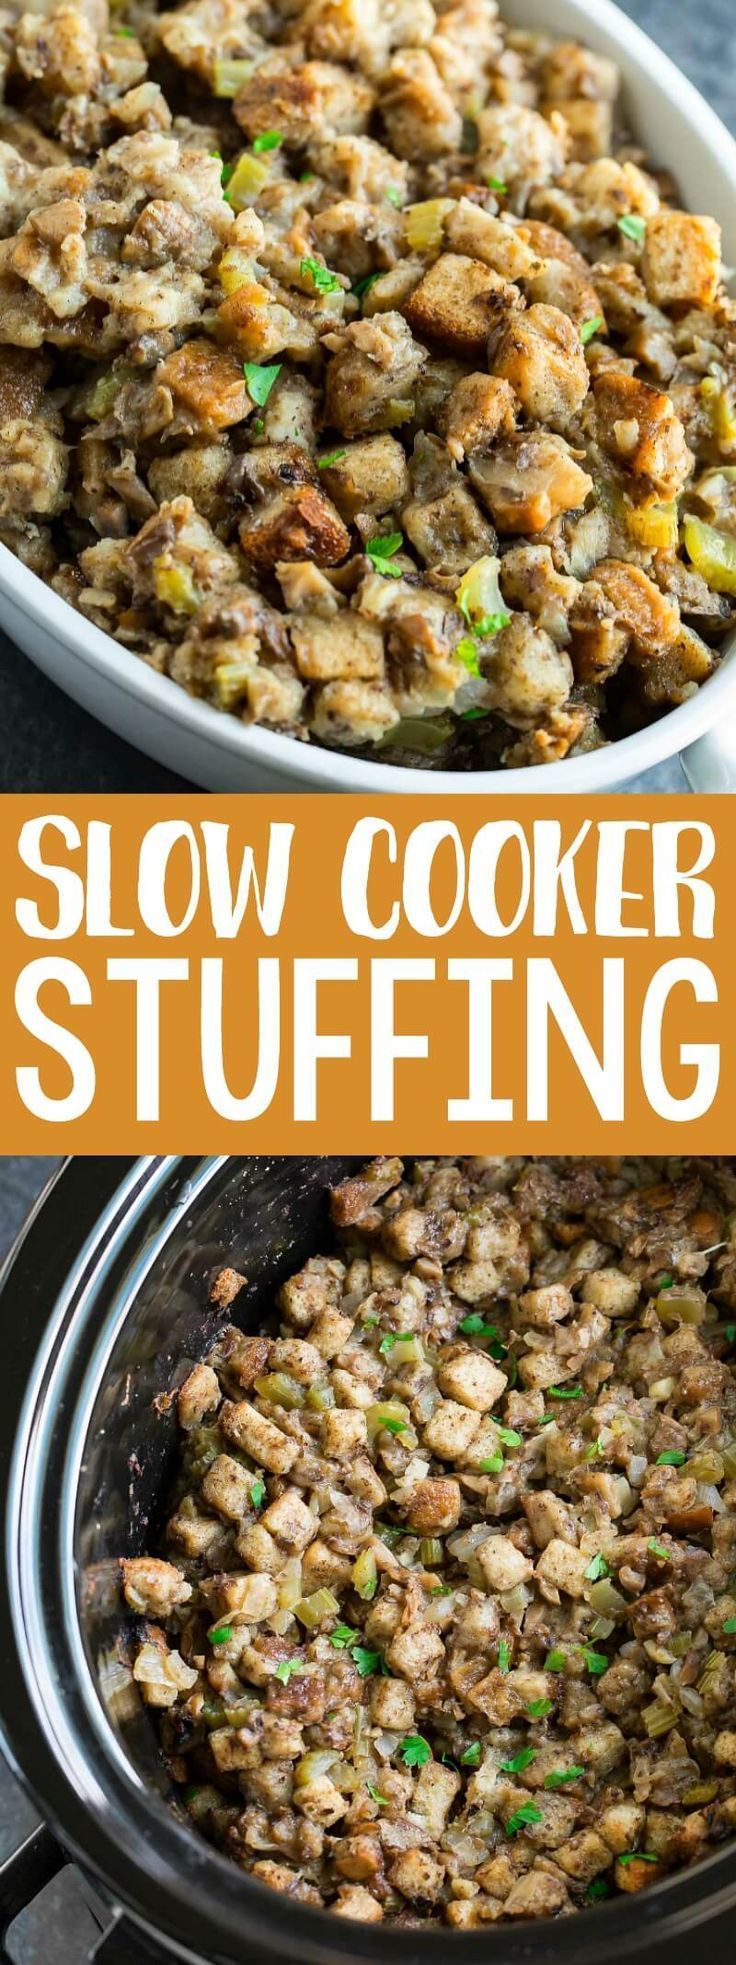 17 stuffing recipes easy crock pot ideas